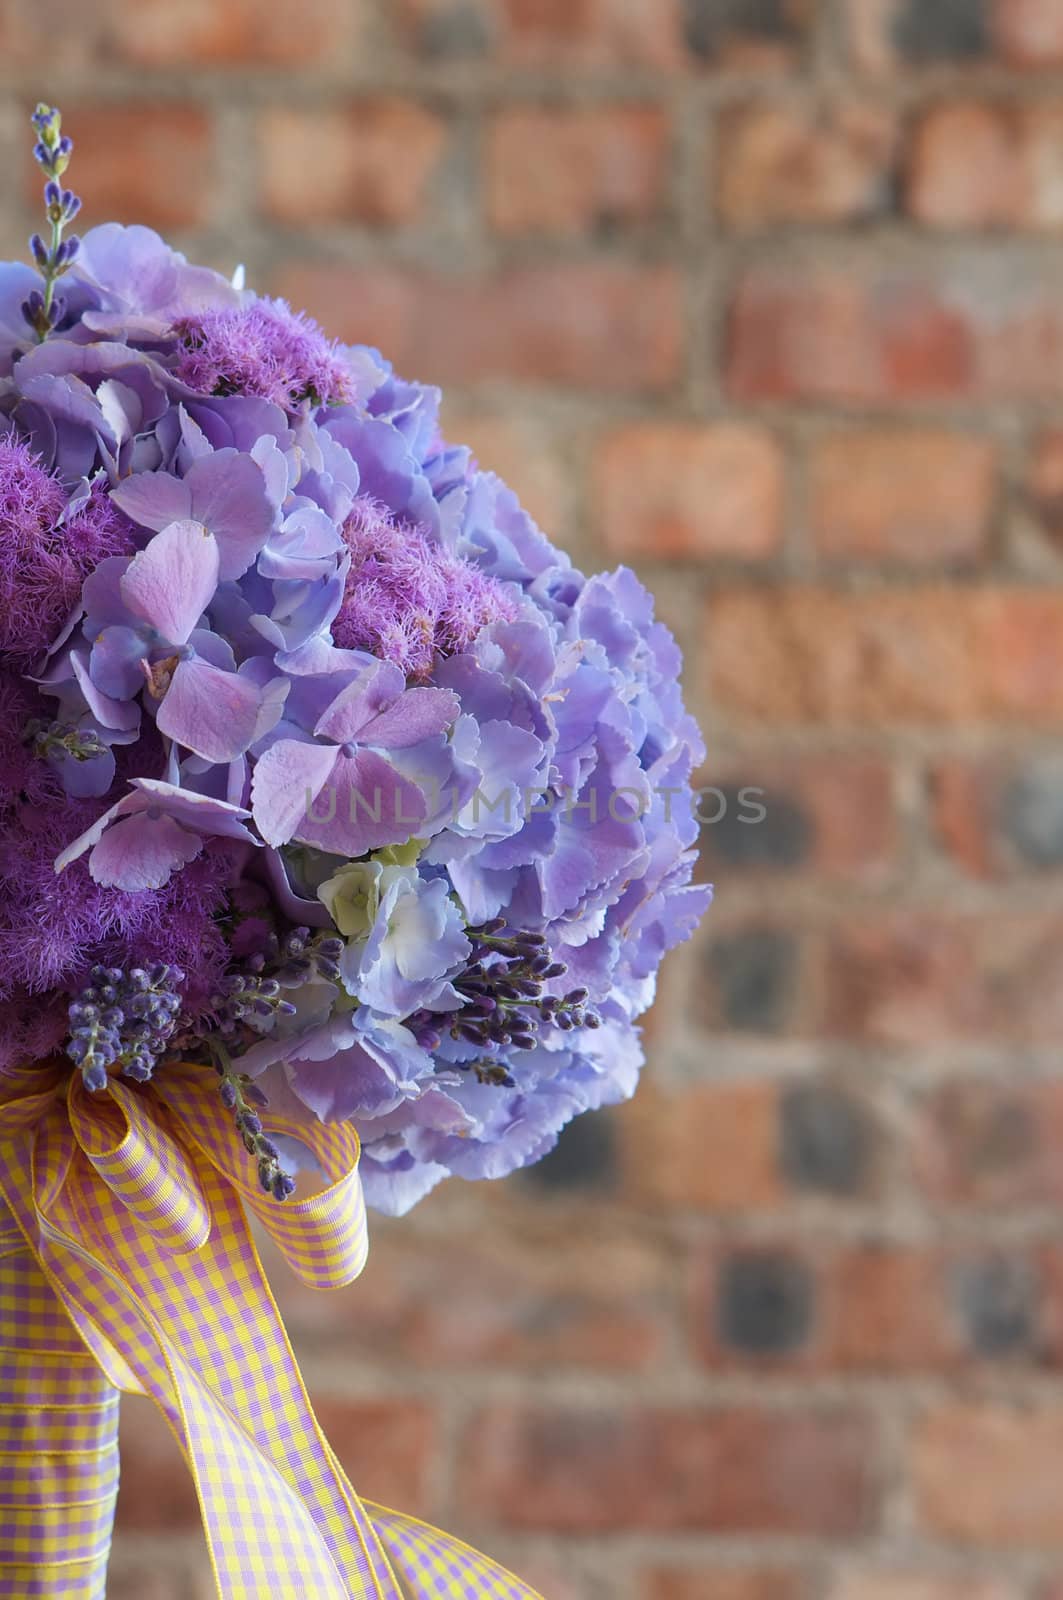 A colorful purple bridal bouquet of flowers